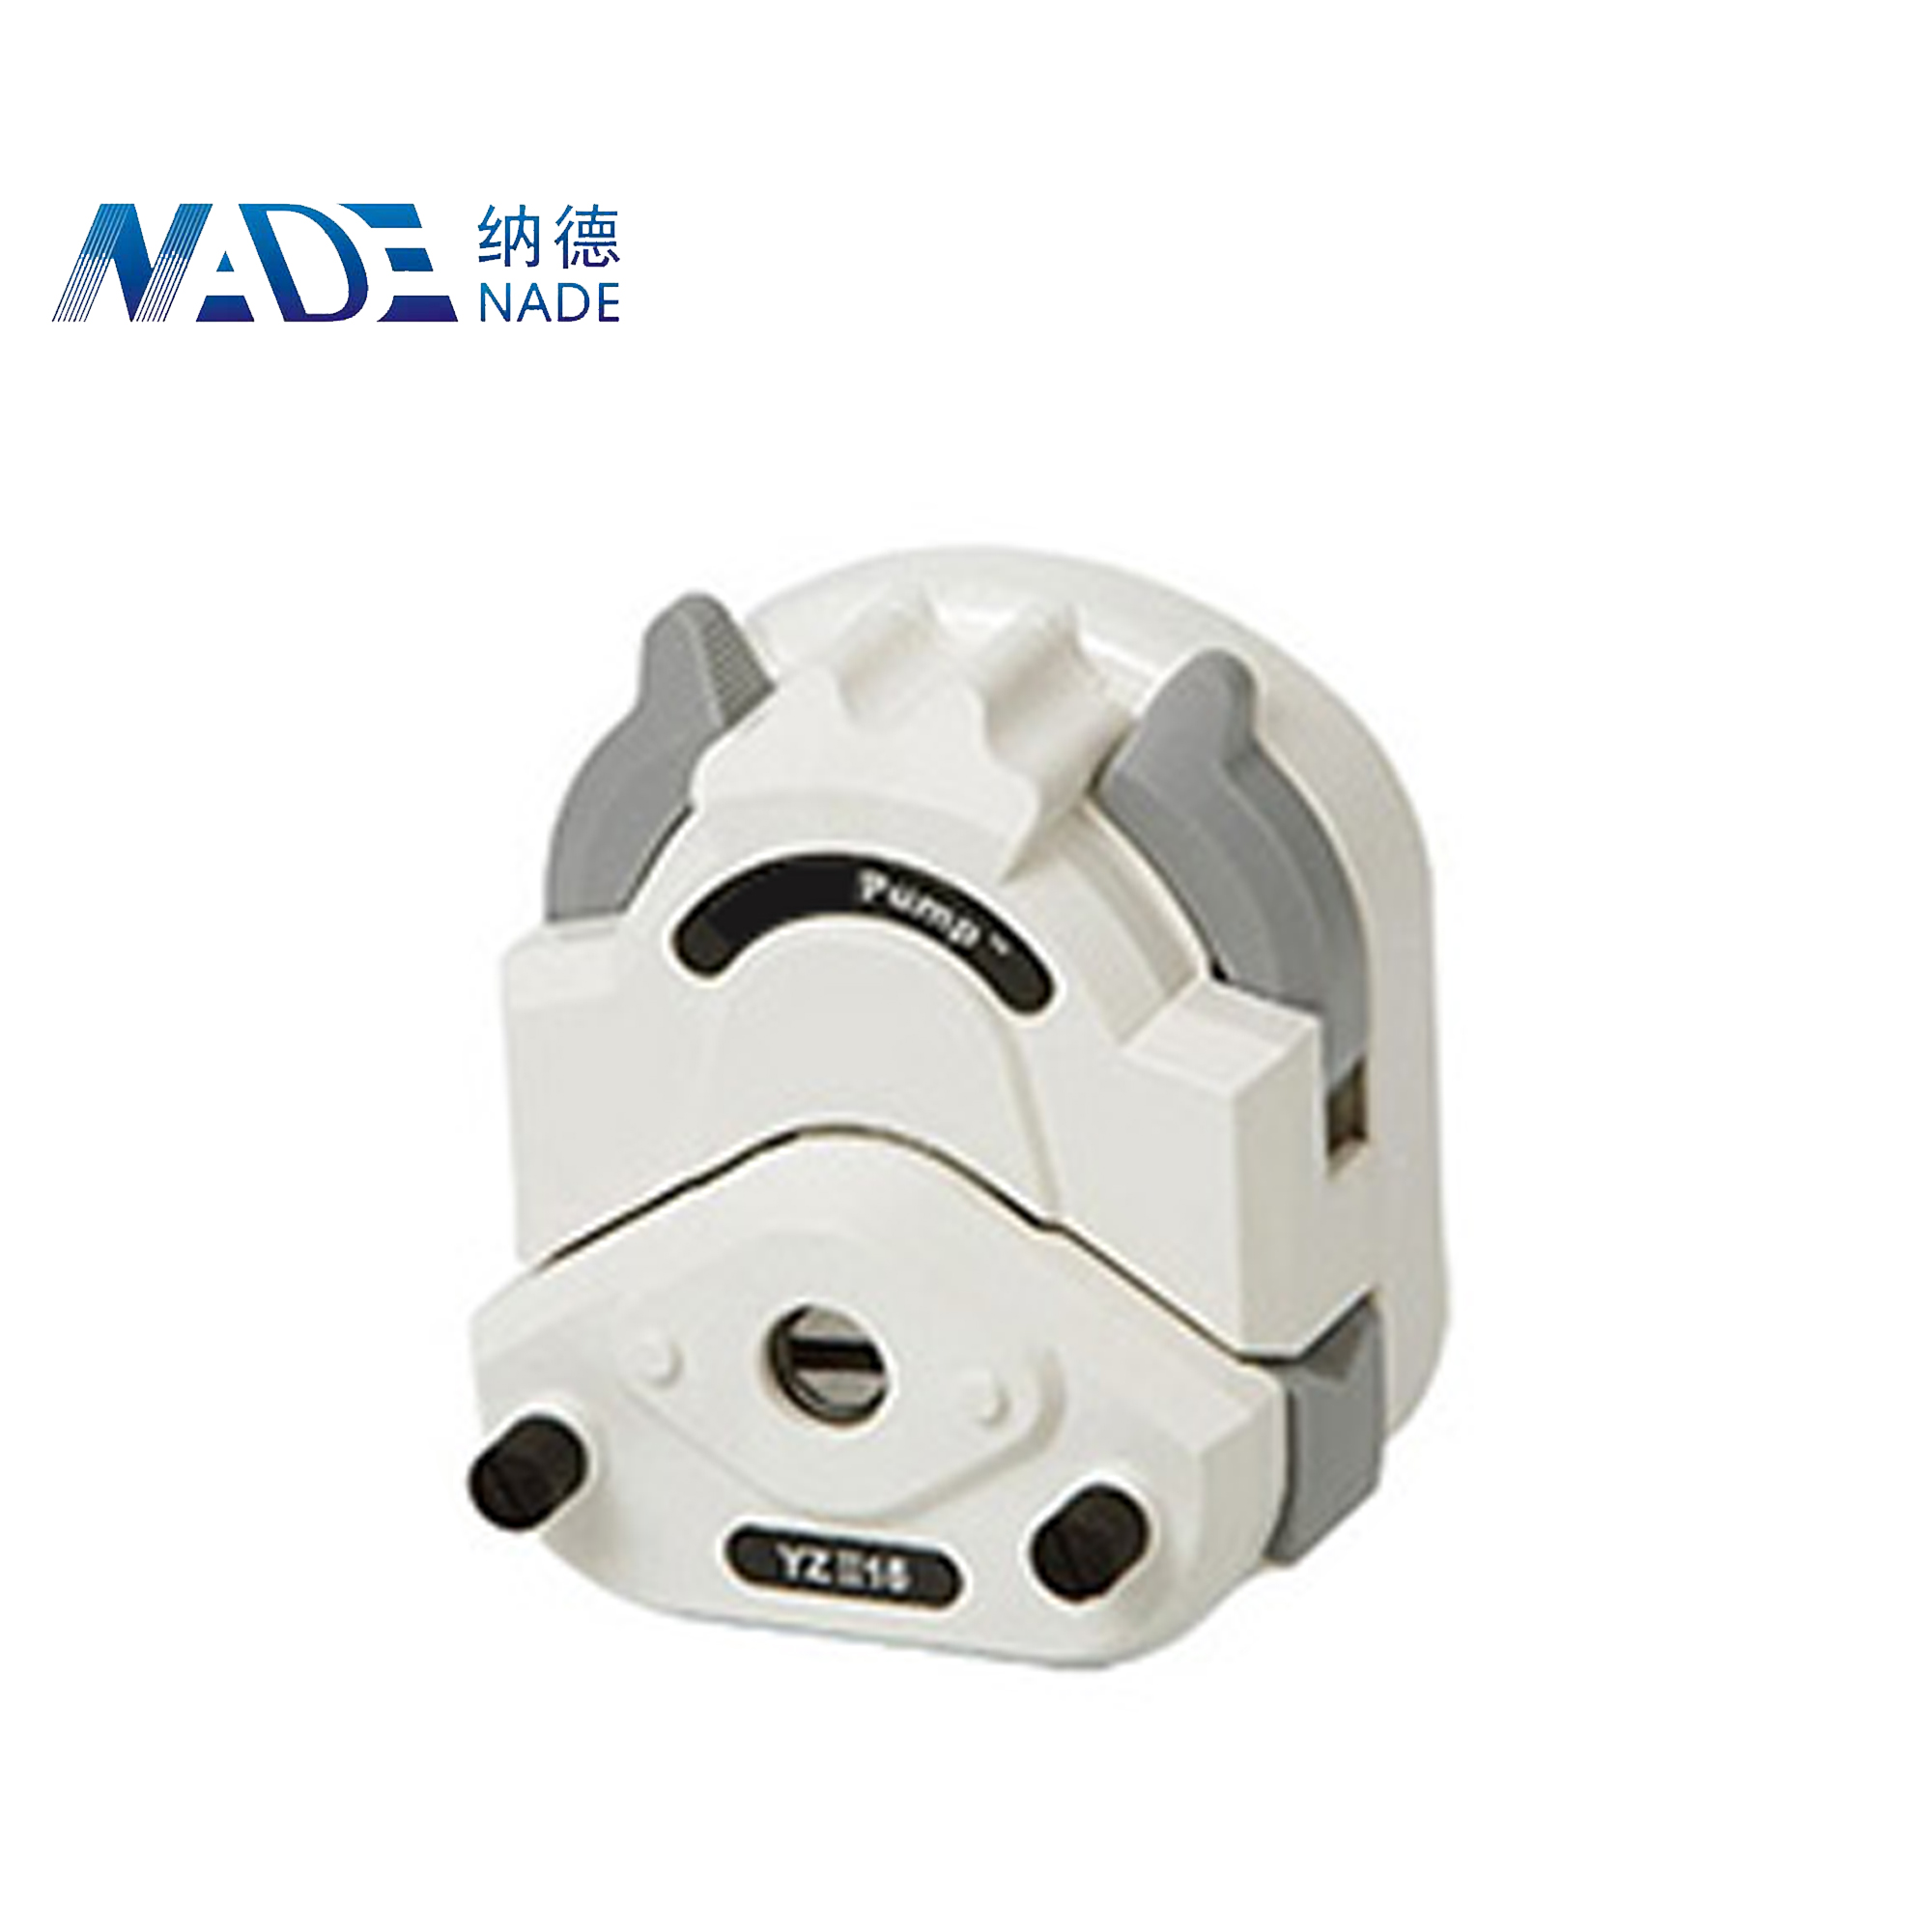 Nade Peristaltic pump head YZII15 for laboratory equipment 0.06 - 2280ml/min